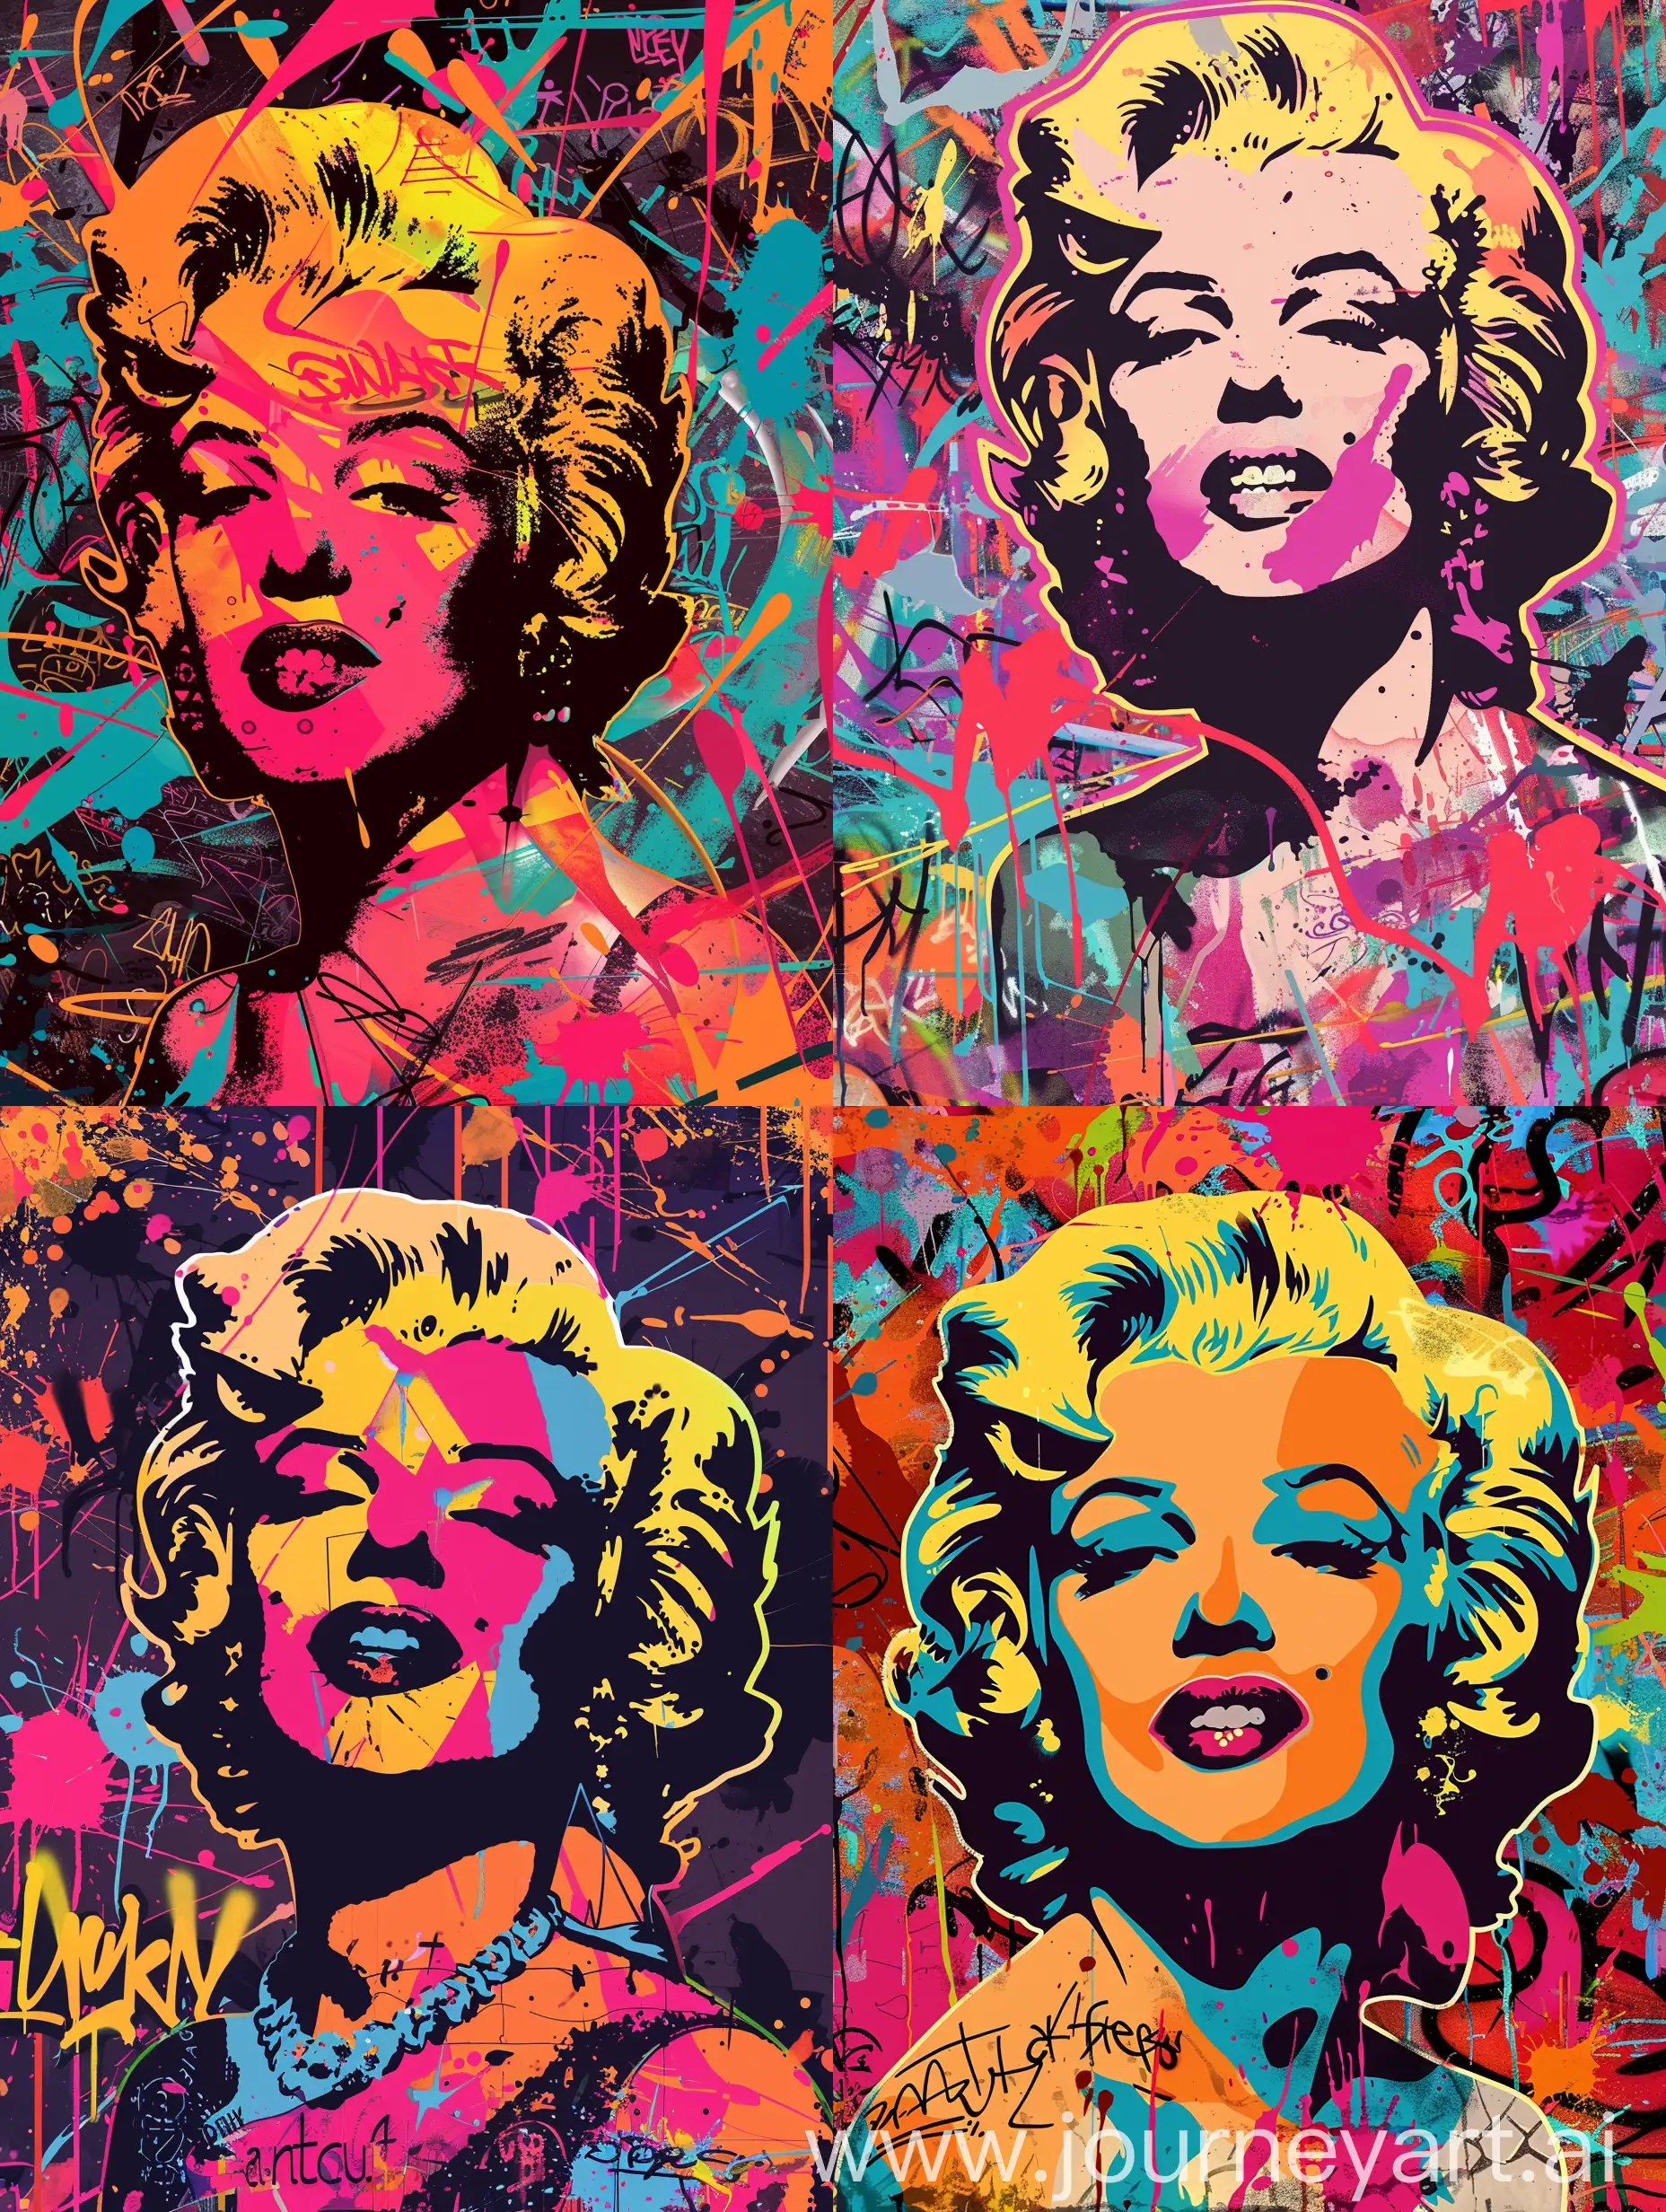 Urban-Graffiti-Portrait-Vibrant-Marilyn-Monroe-Illustration-on-Canvas